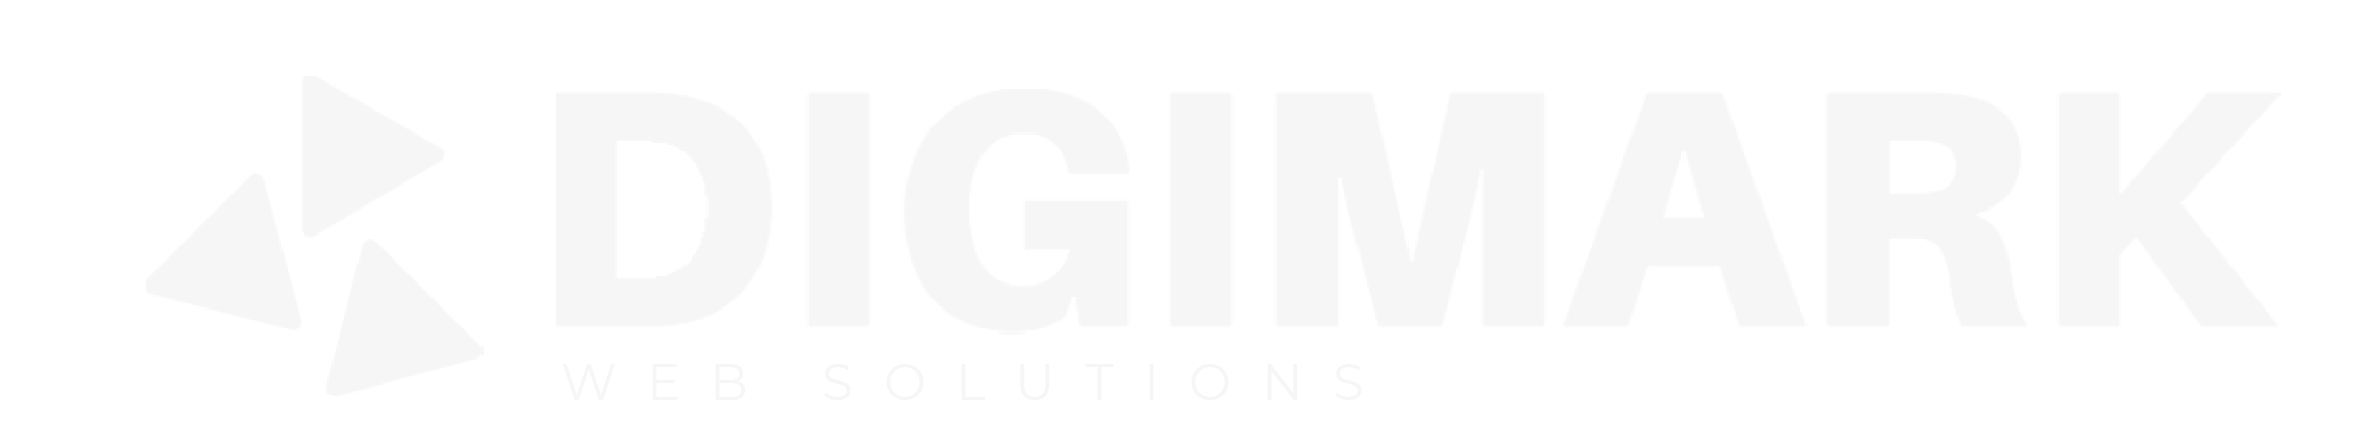 Digimark Web Solutions